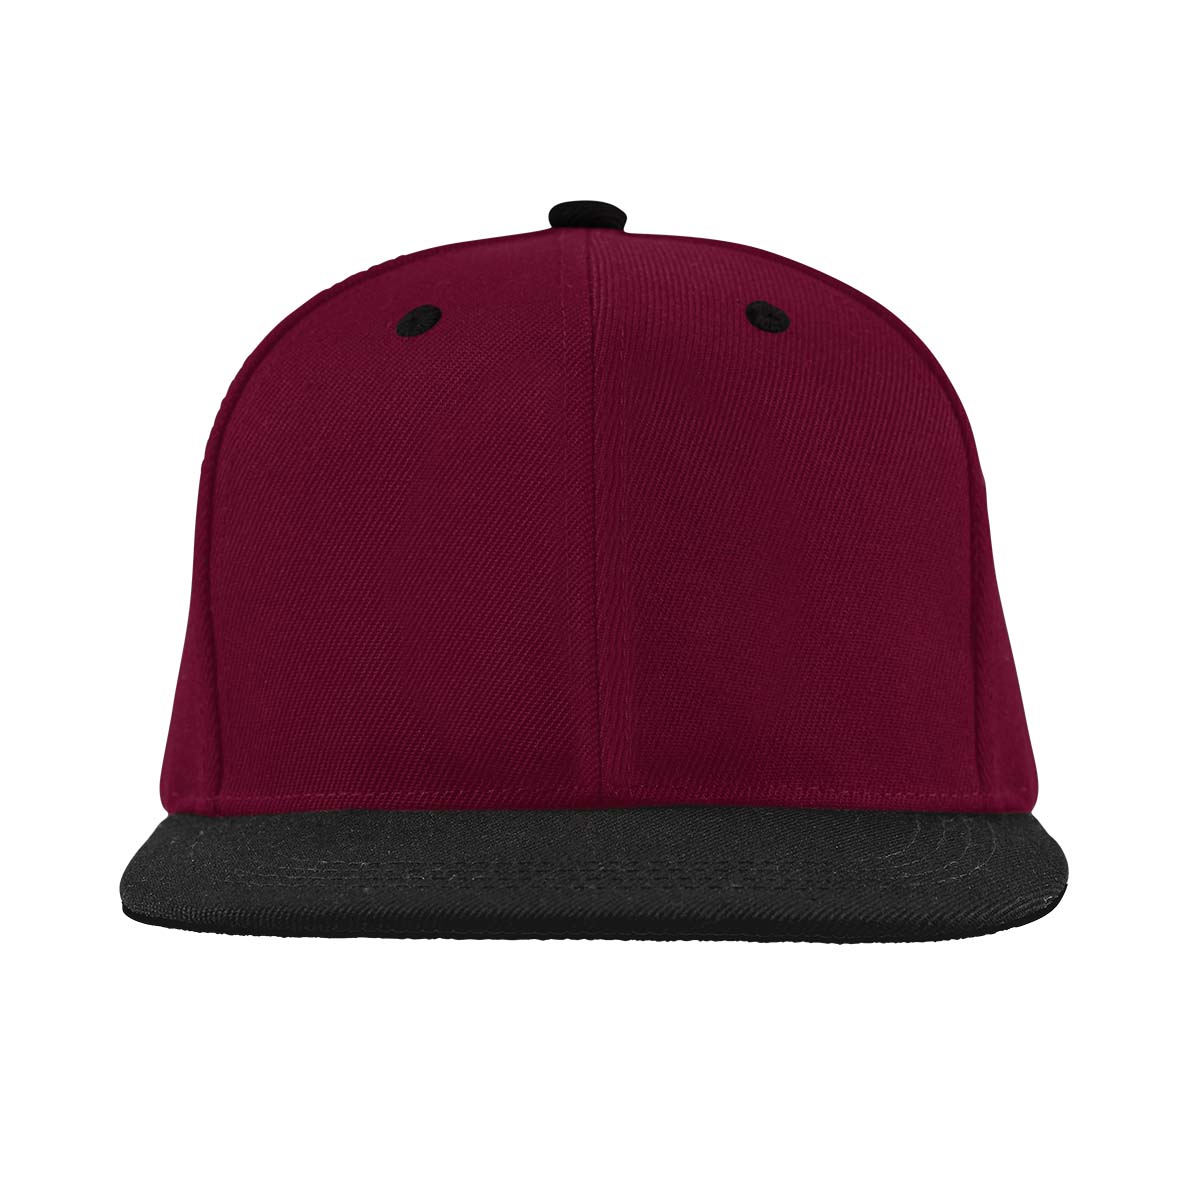 Navy Blank Snapback Hat - Sleek, Comfortable Design - Mammoth Headwear